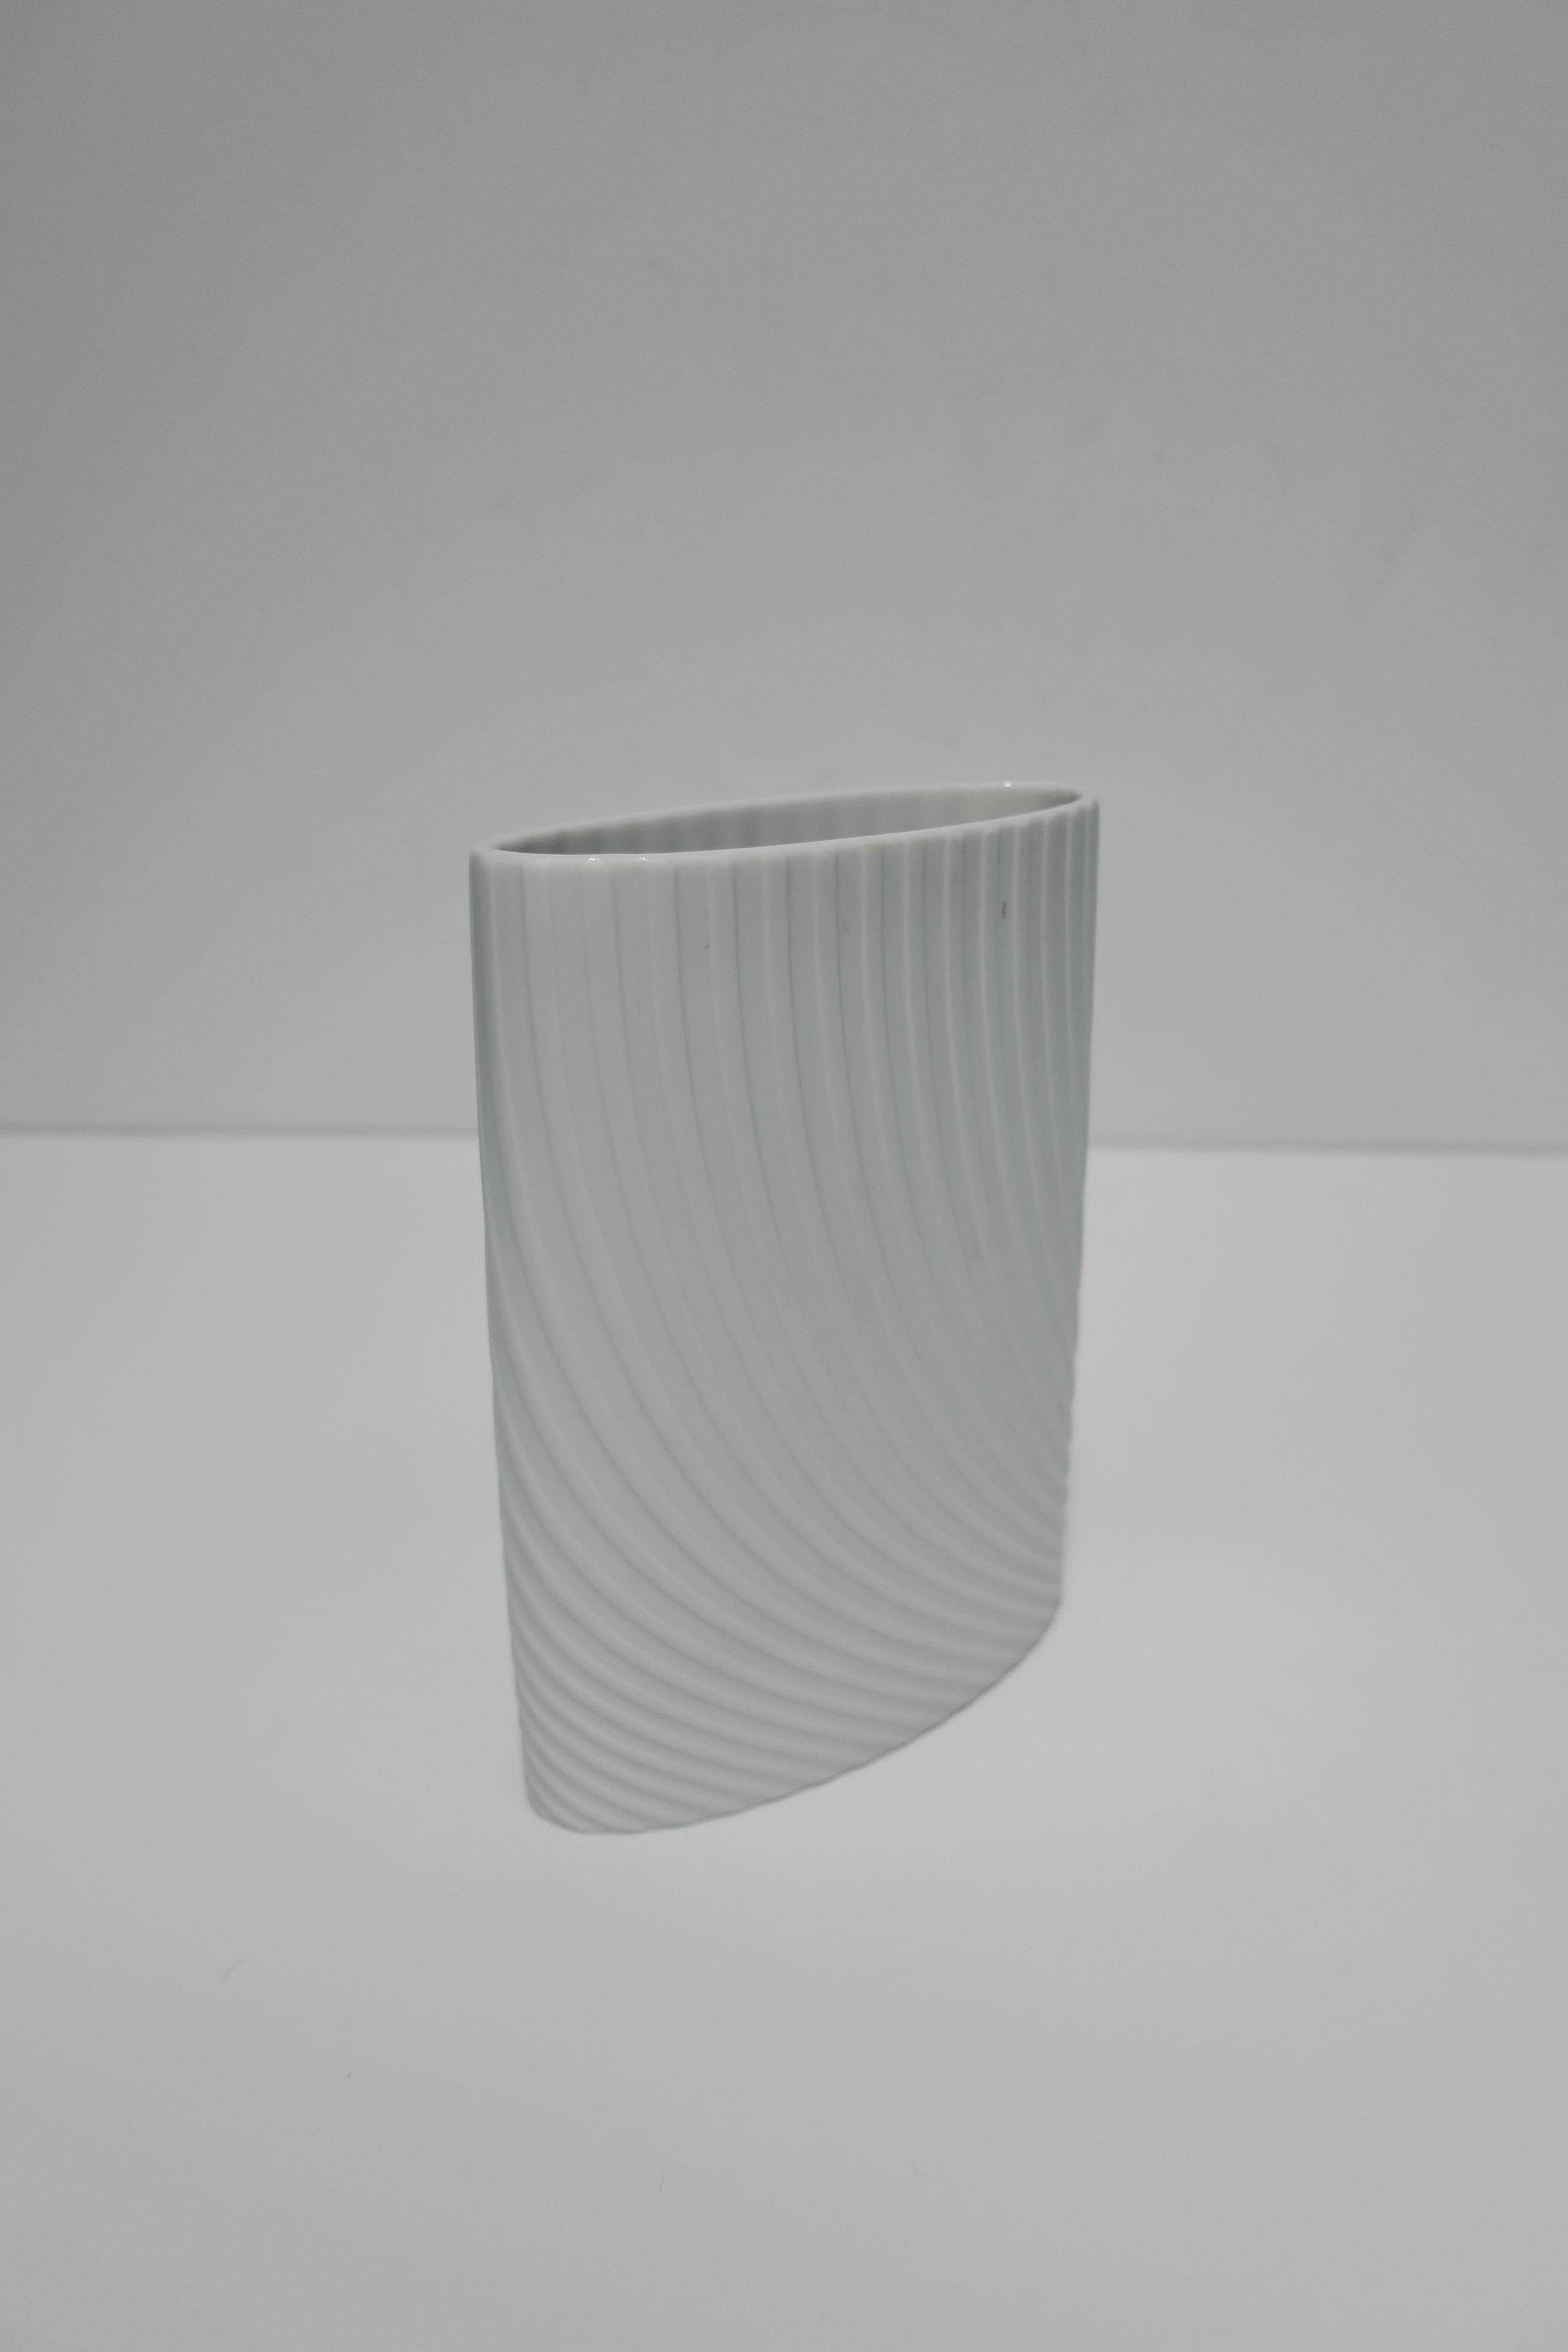 Unglazed Designer White Matte Porcelain Vase by Rosenthal Studio-Line For Sale